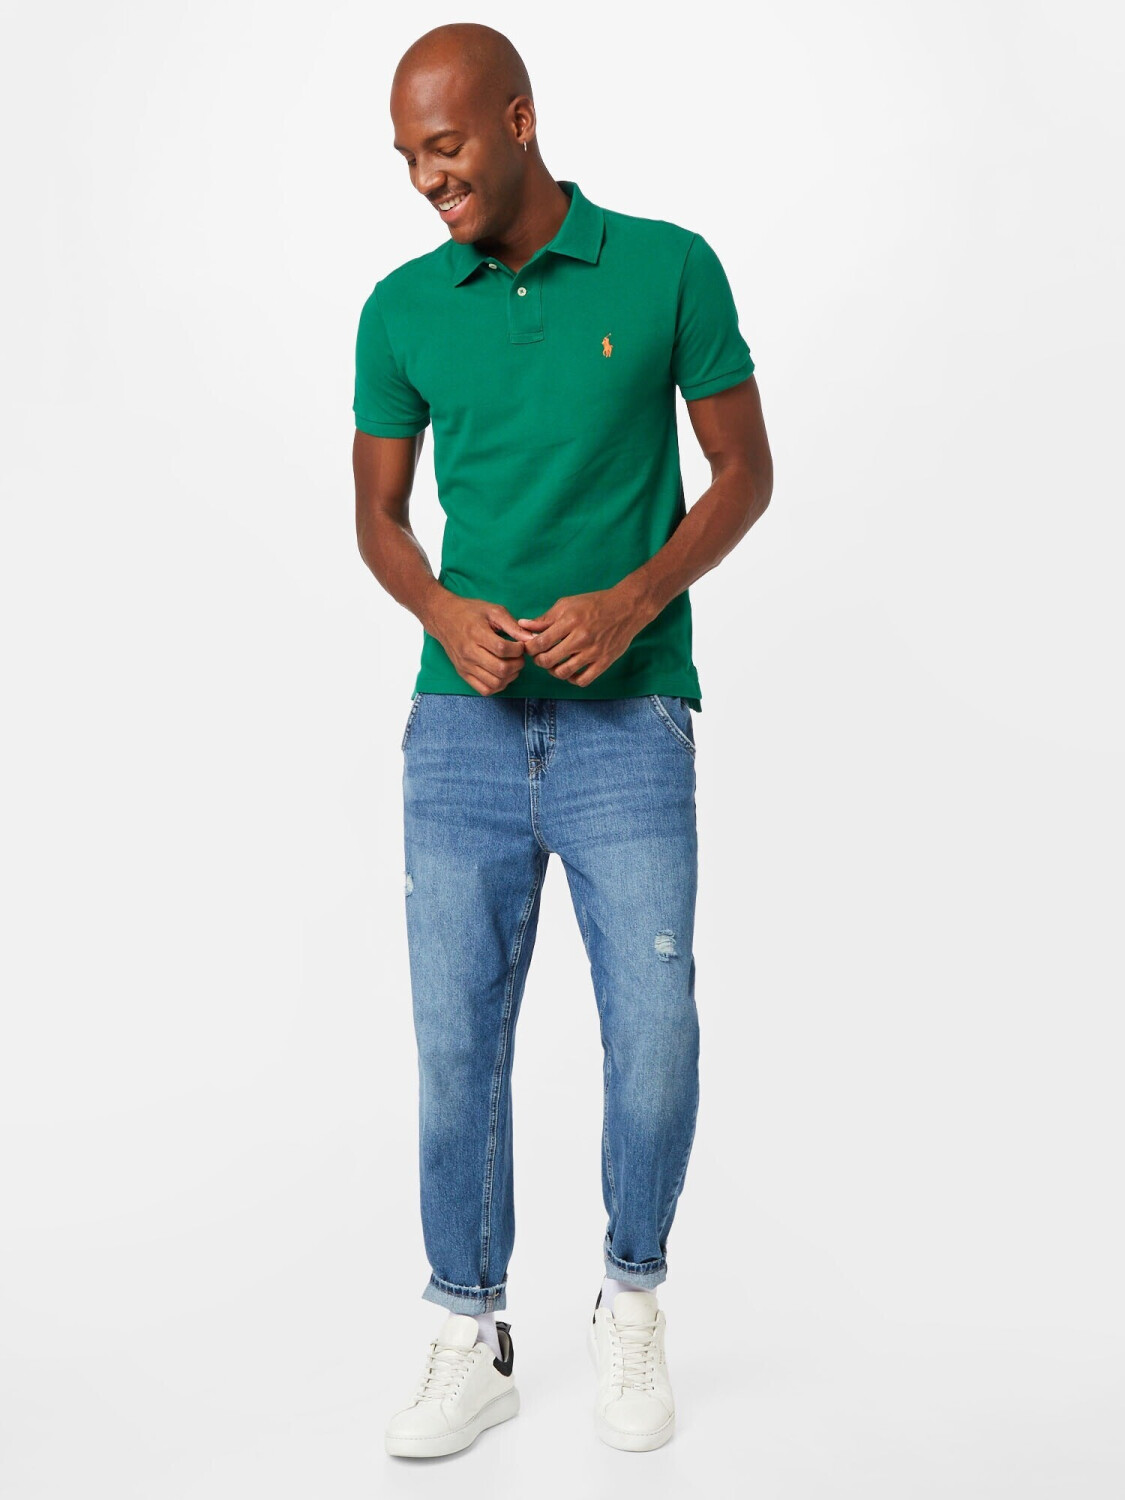 Polo Ralph Lauren Poloshirt (710536856-351) green ab € 119,99 |  Preisvergleich bei